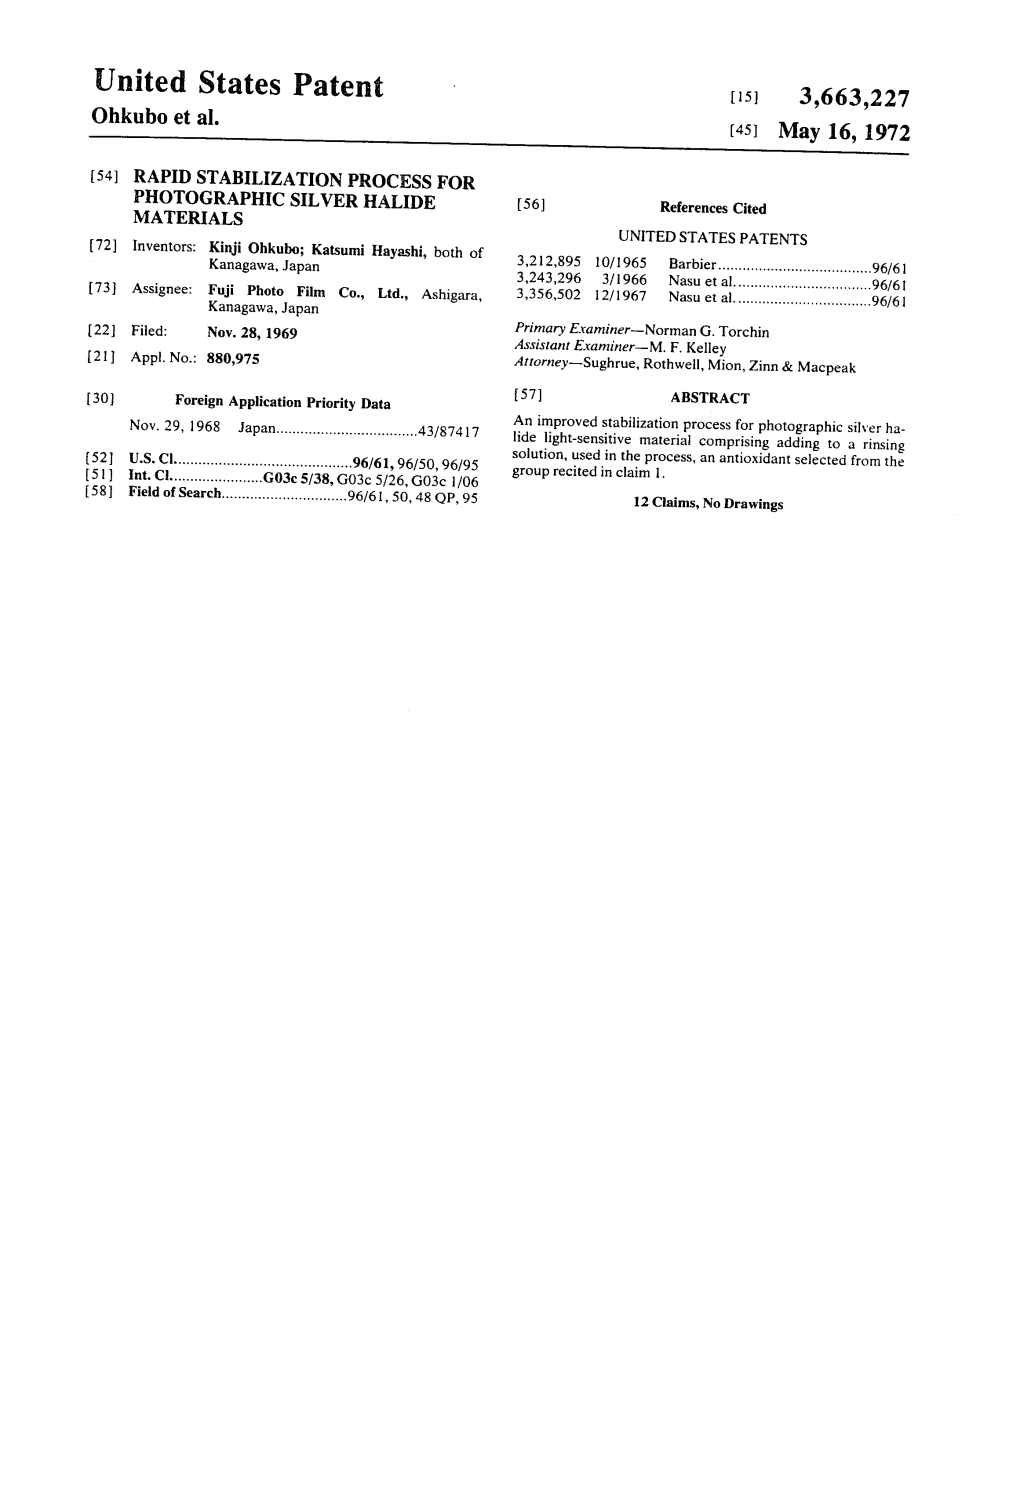 United States Patent (15) 3,663,227 Ohkubo Et Al